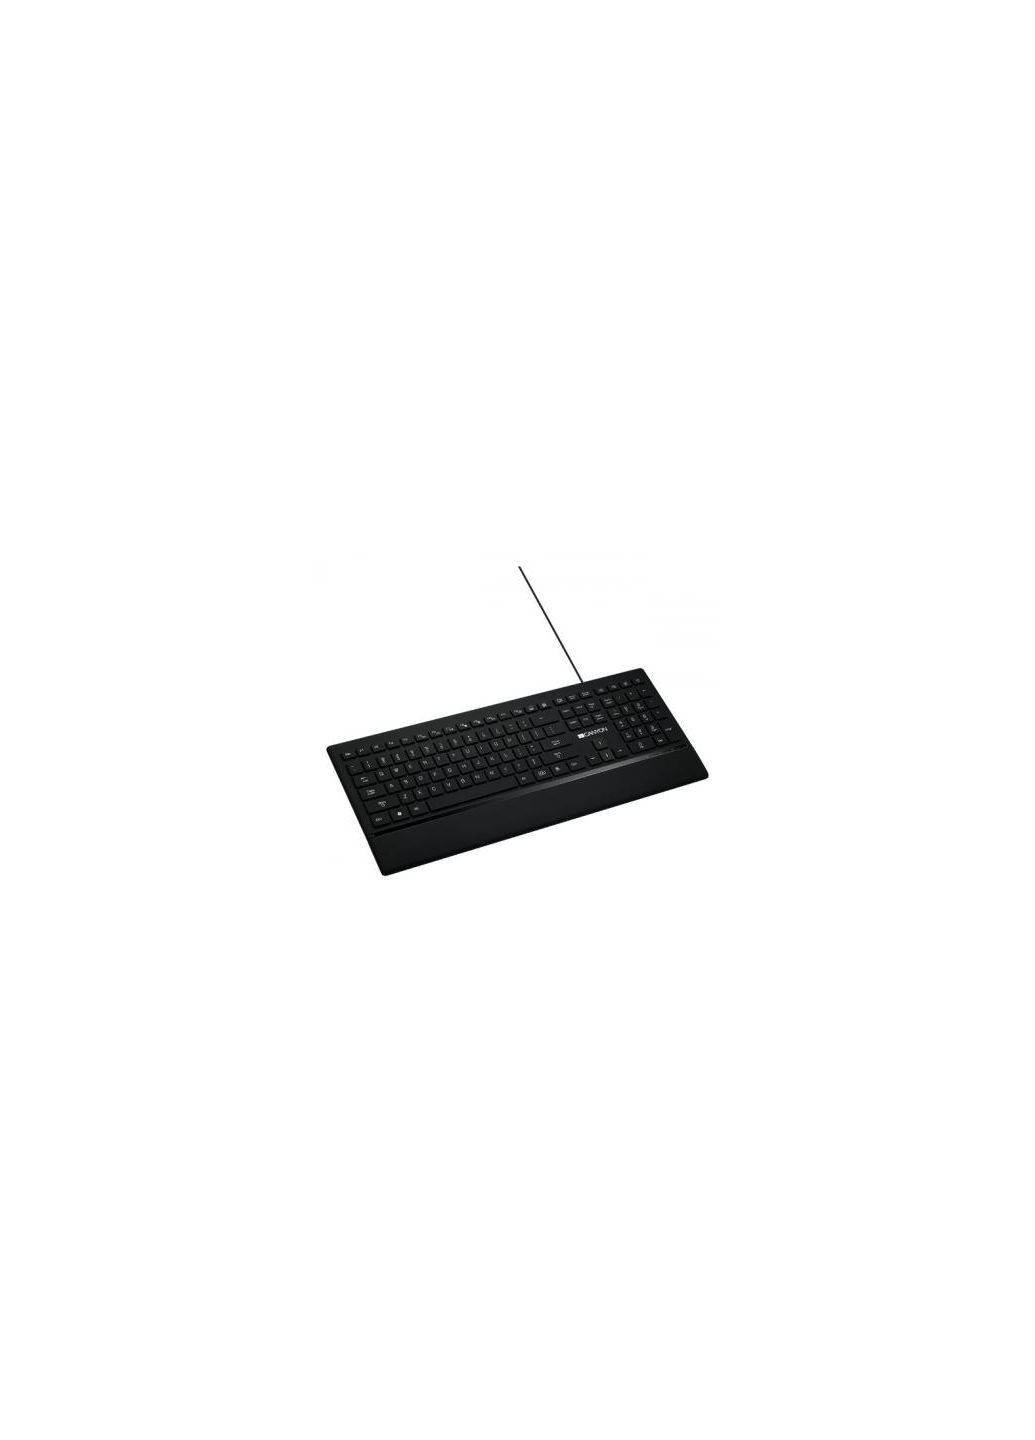 Клавиатура CNSHKB6-RU Black USB (CNS-HKB6-RU) Canyon cns-hkb6-ru black usb (276706453)